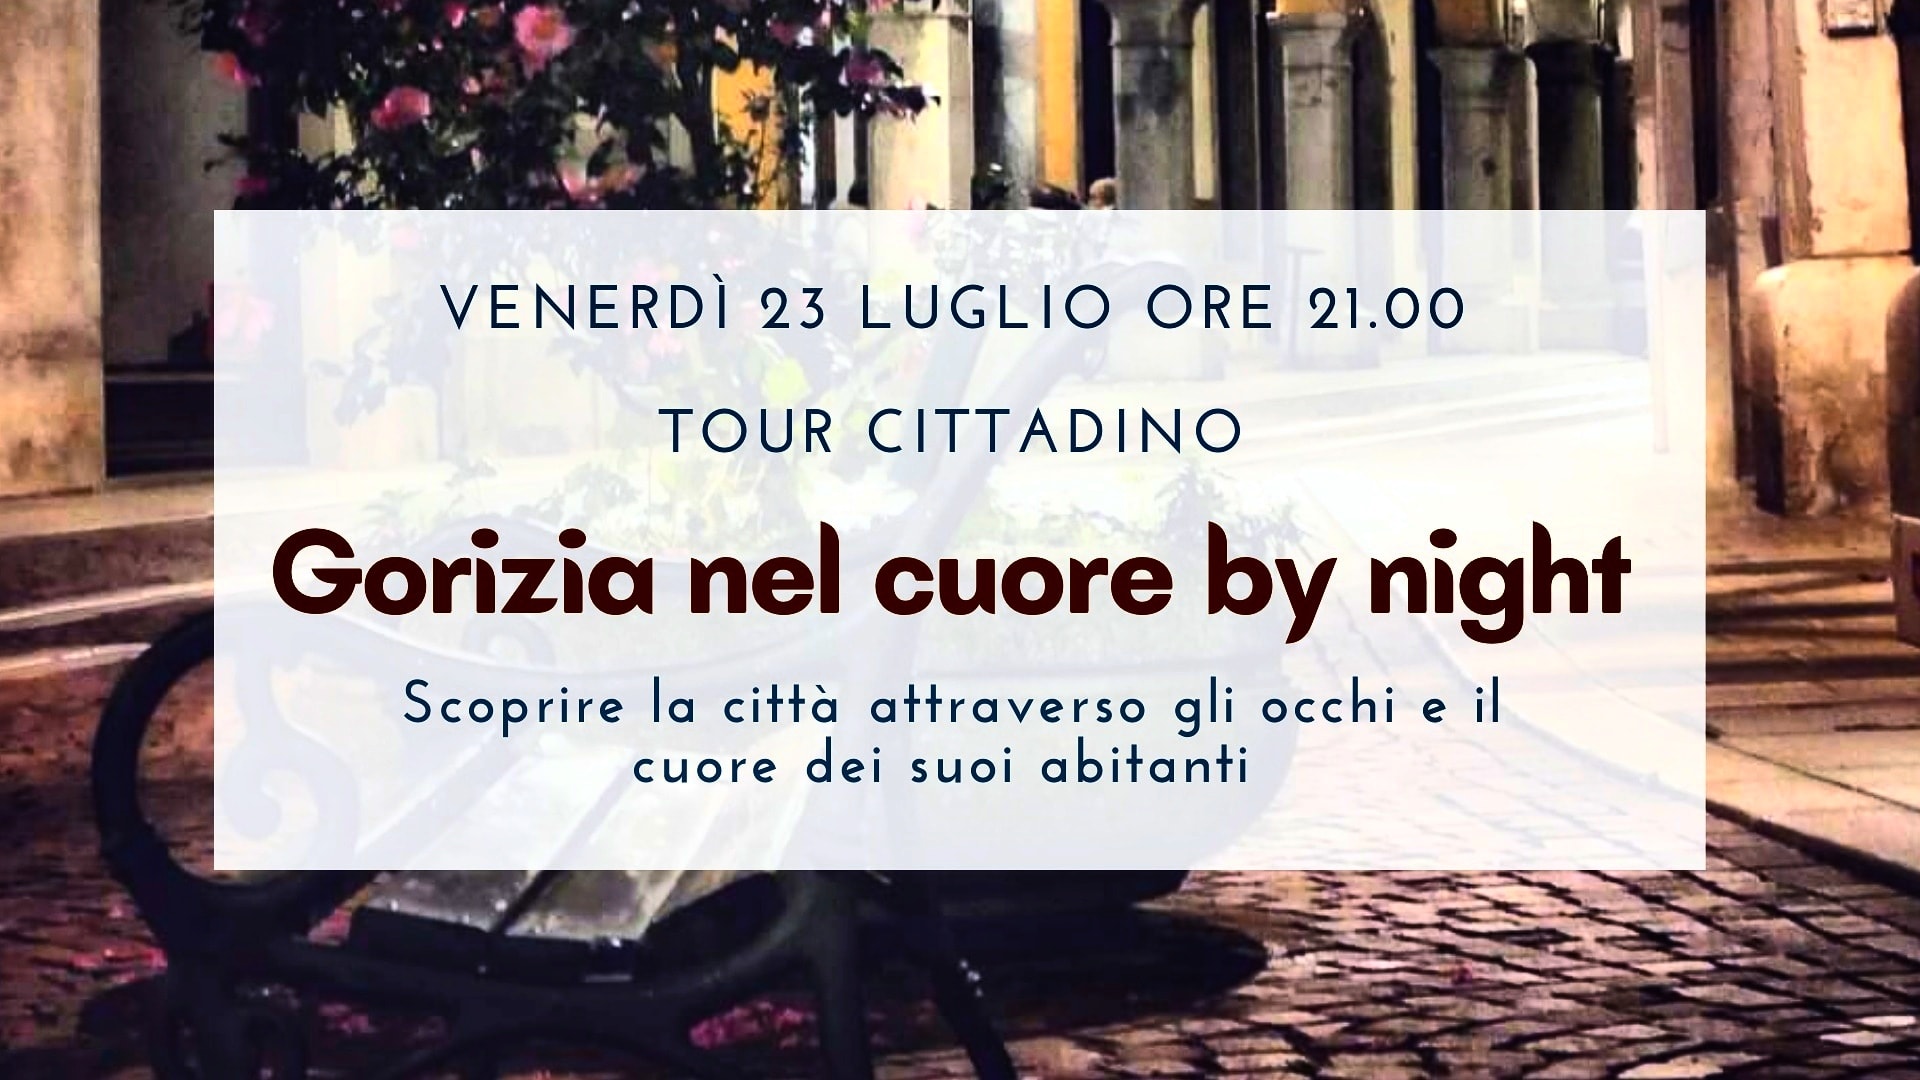 Tour cittadino "Gorizia insolita by night" - EventiFVG.it